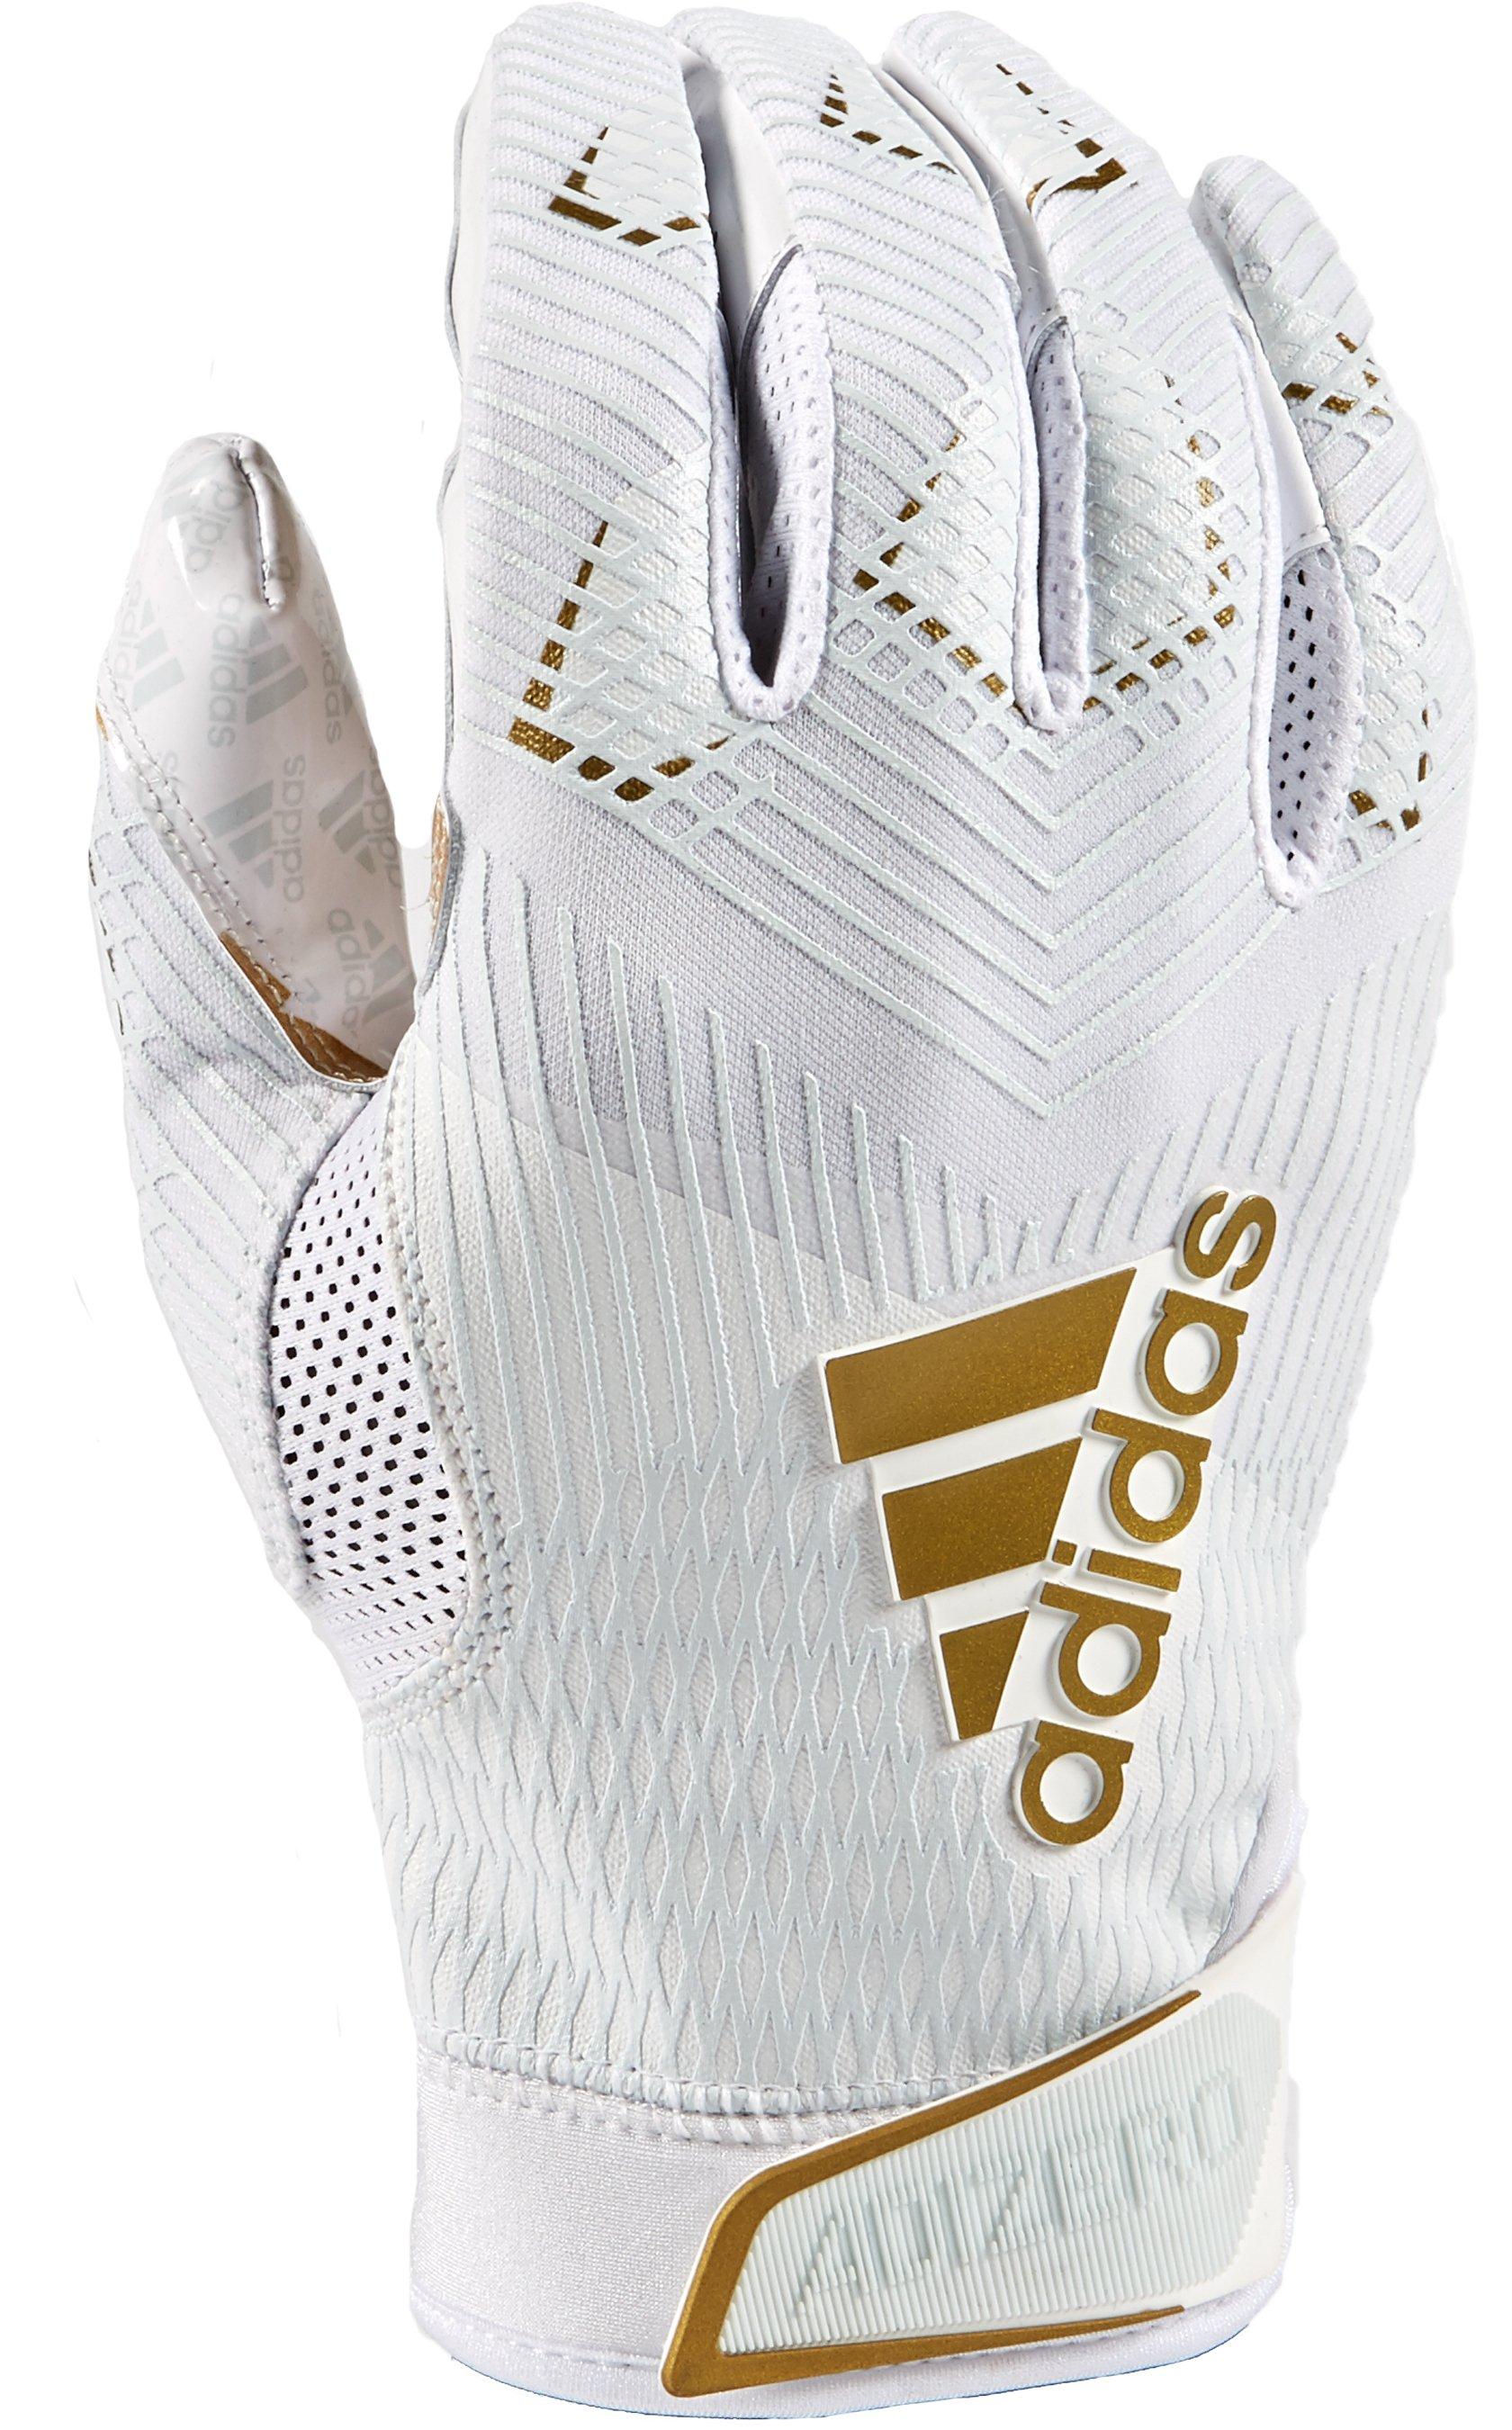 adidas football gloves 8.0